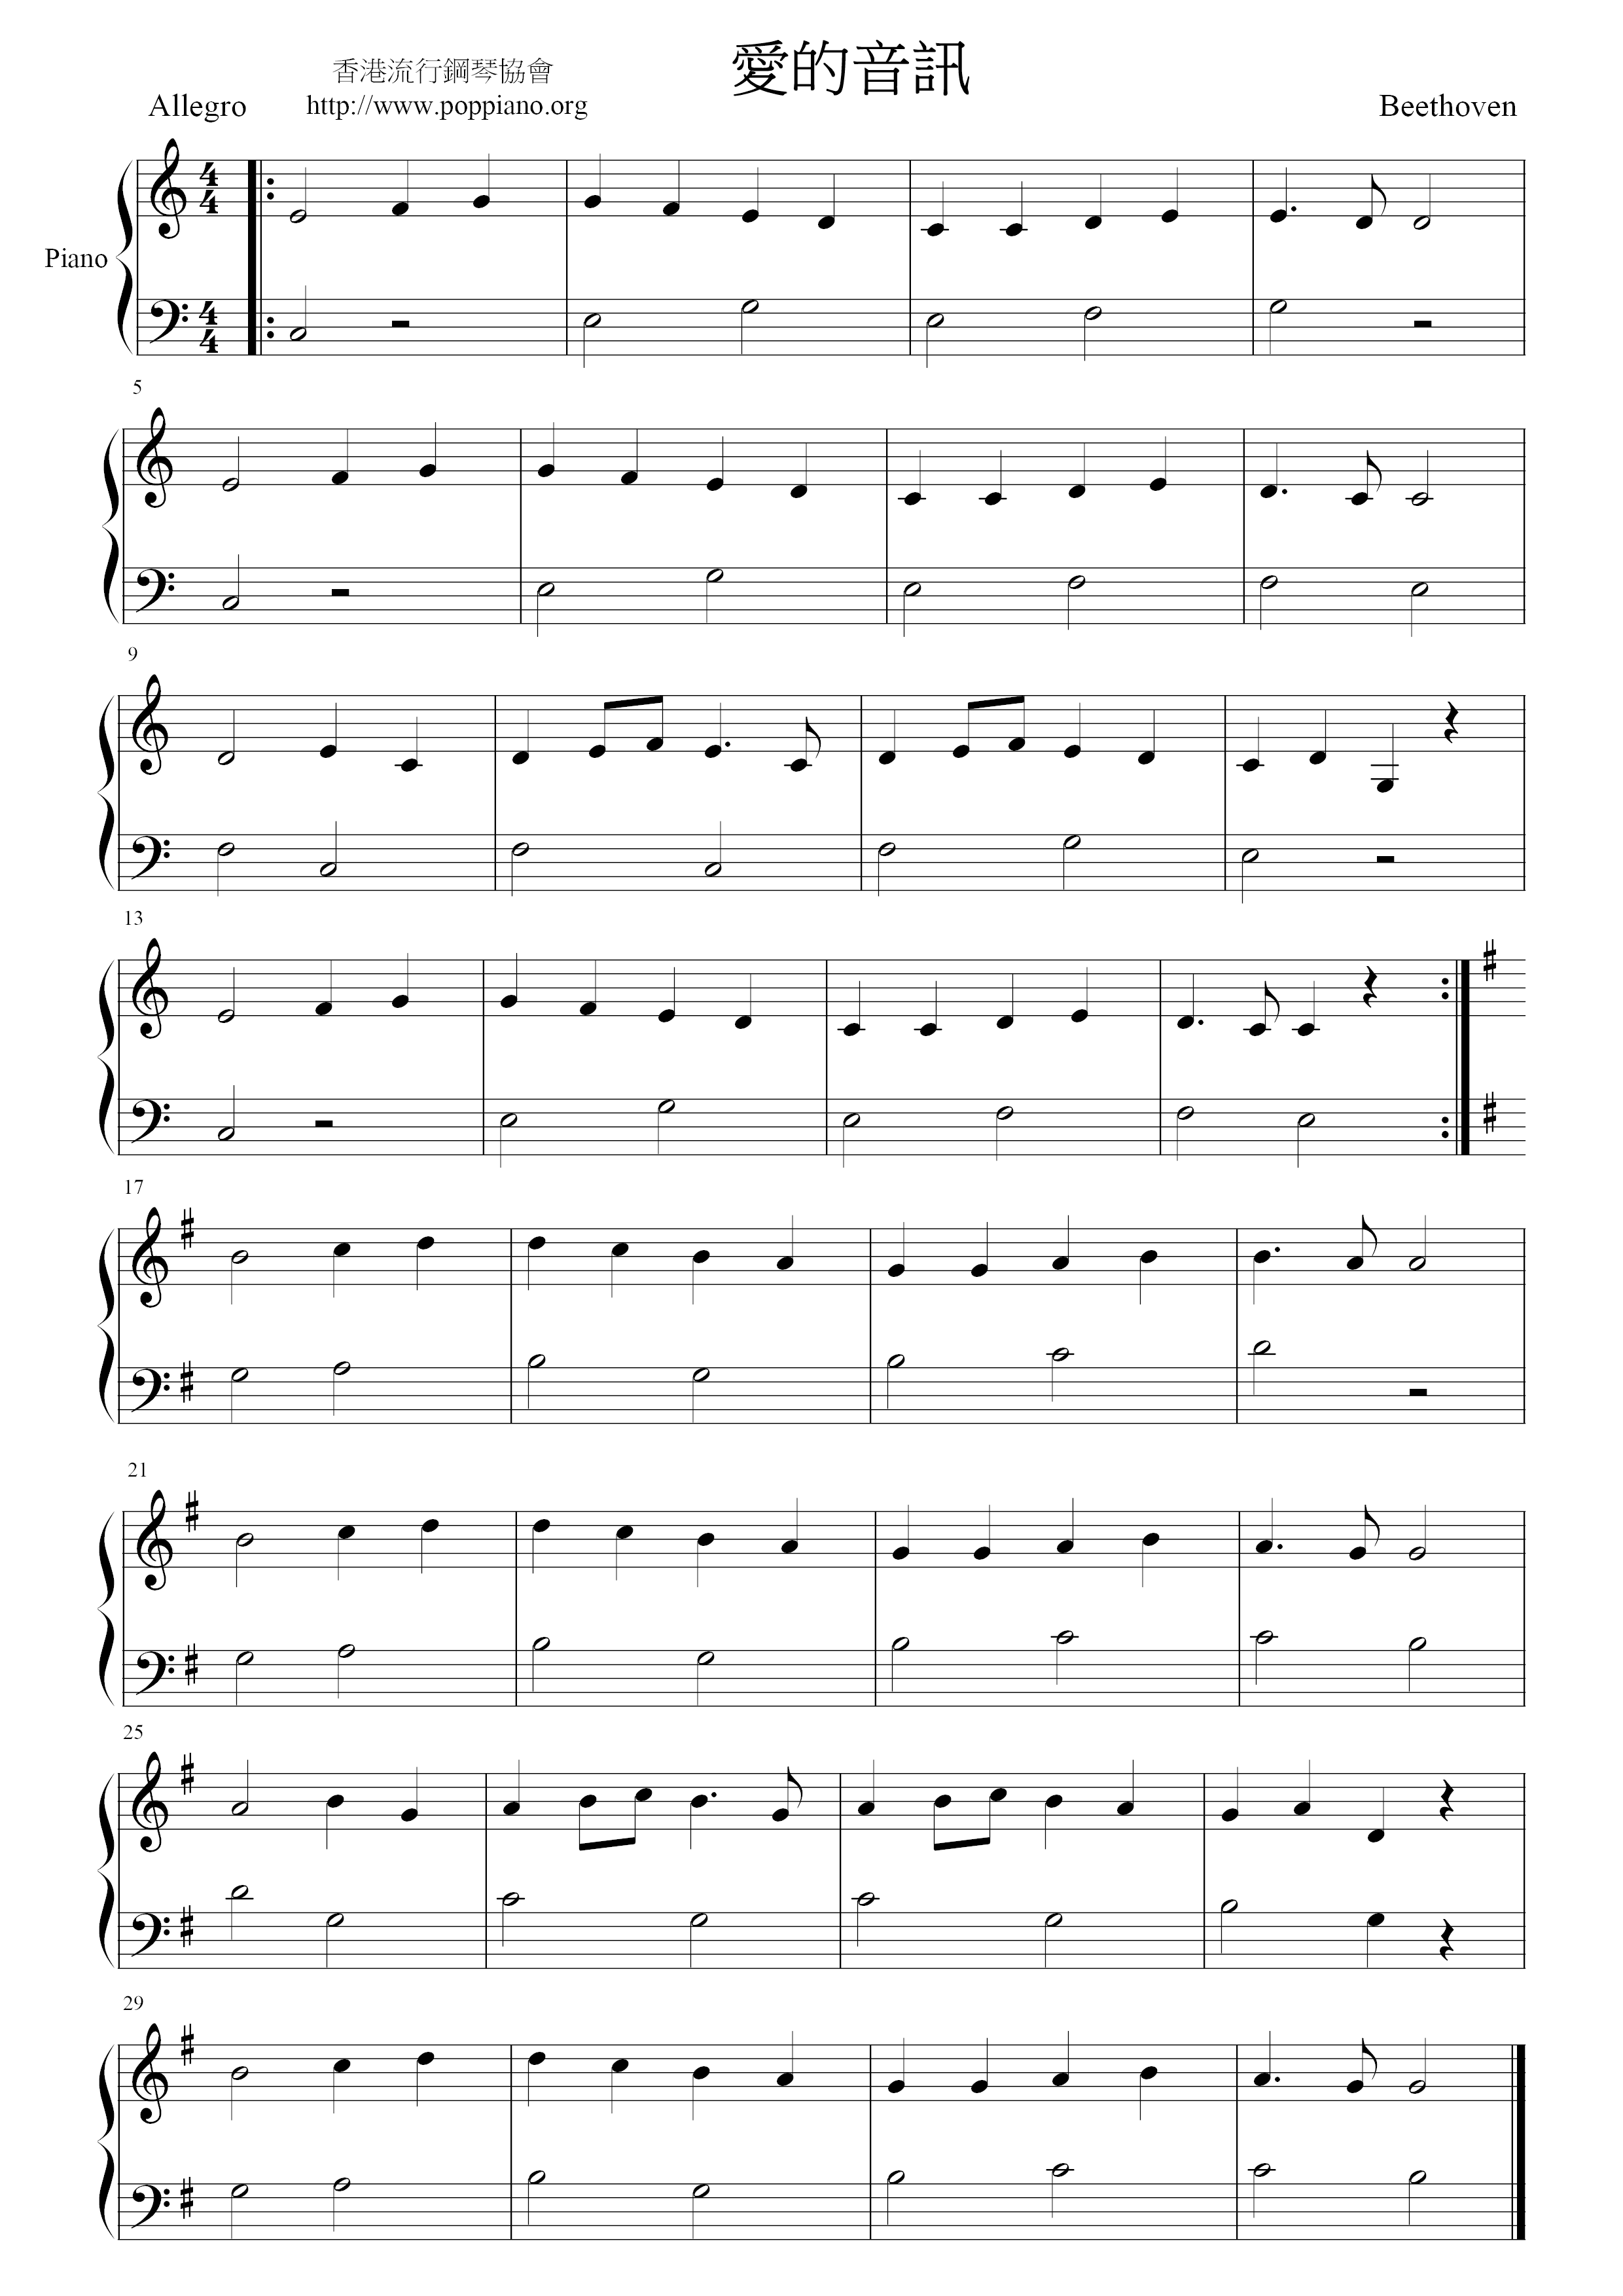 Ode To Joy Score